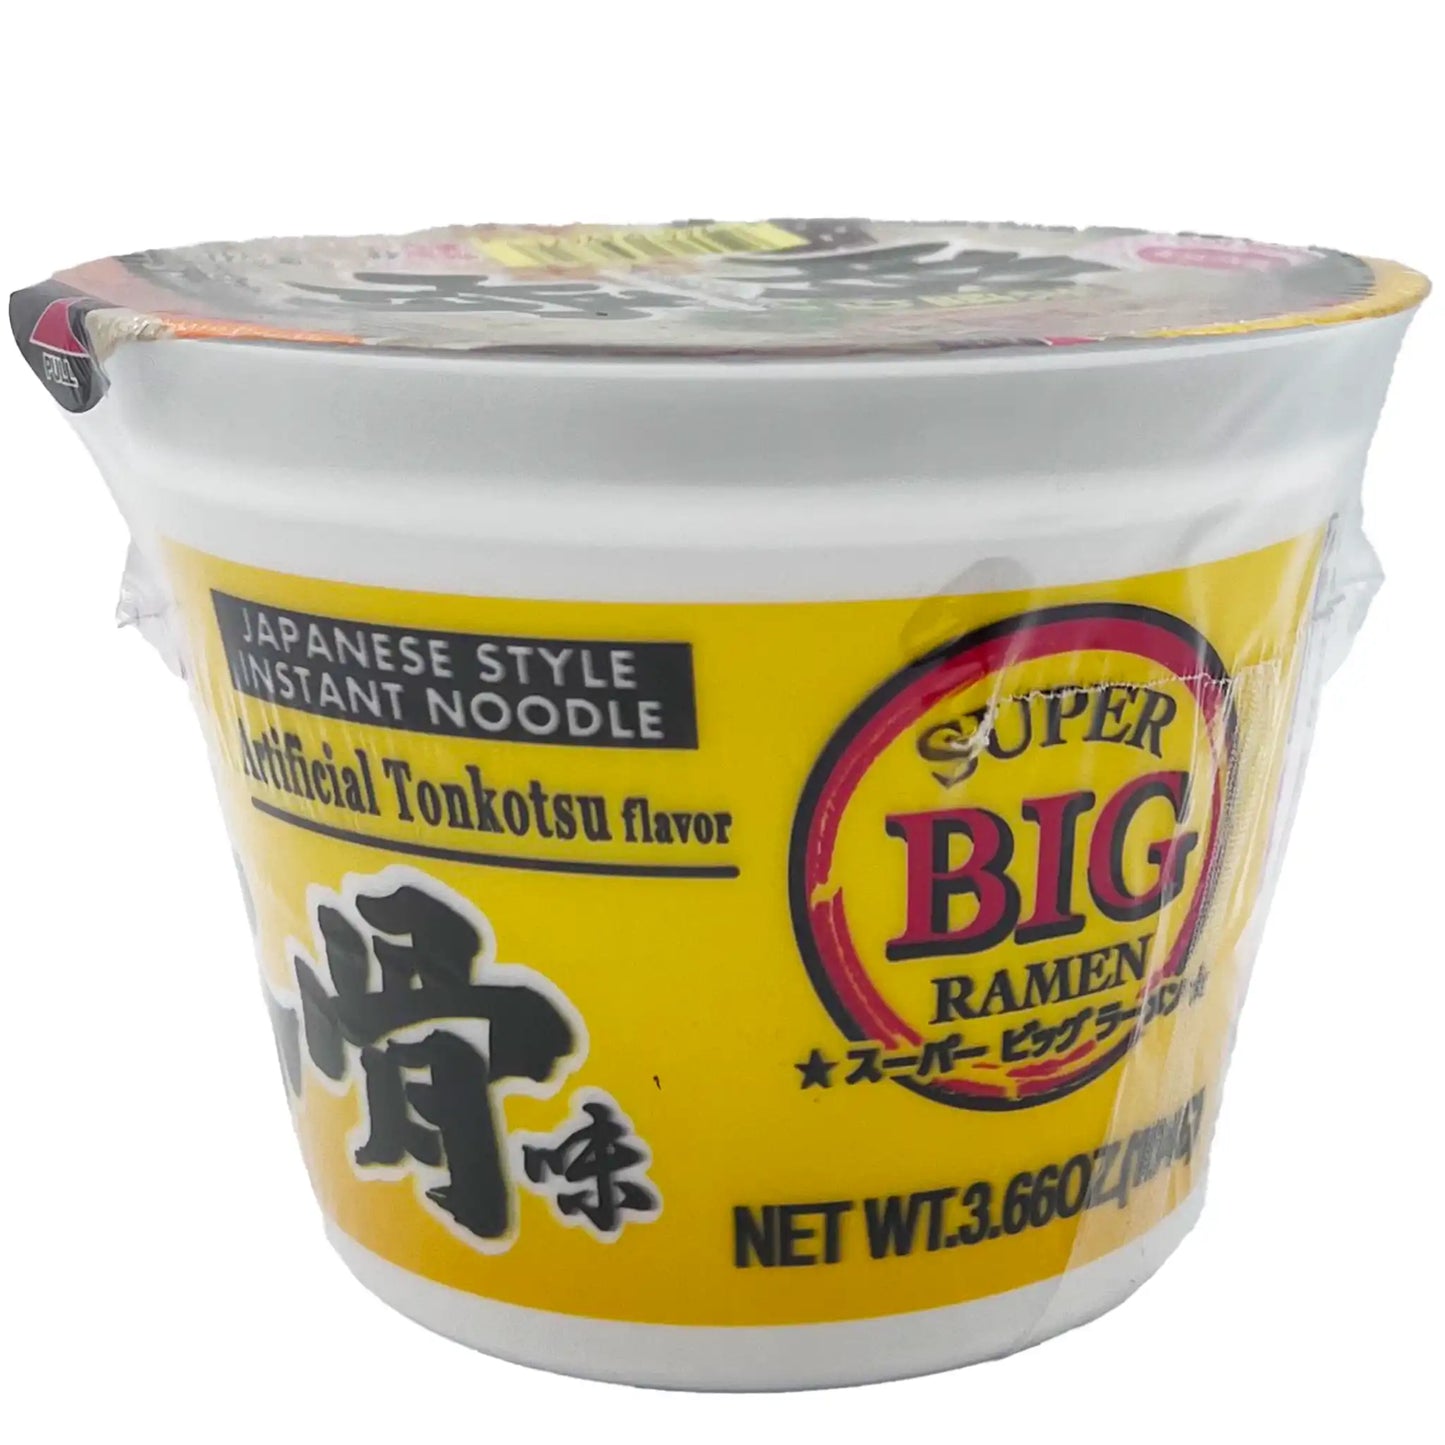 Acecook Super Big Instant Ramen Cup, Tonkotsu Flavor 3.66 oz